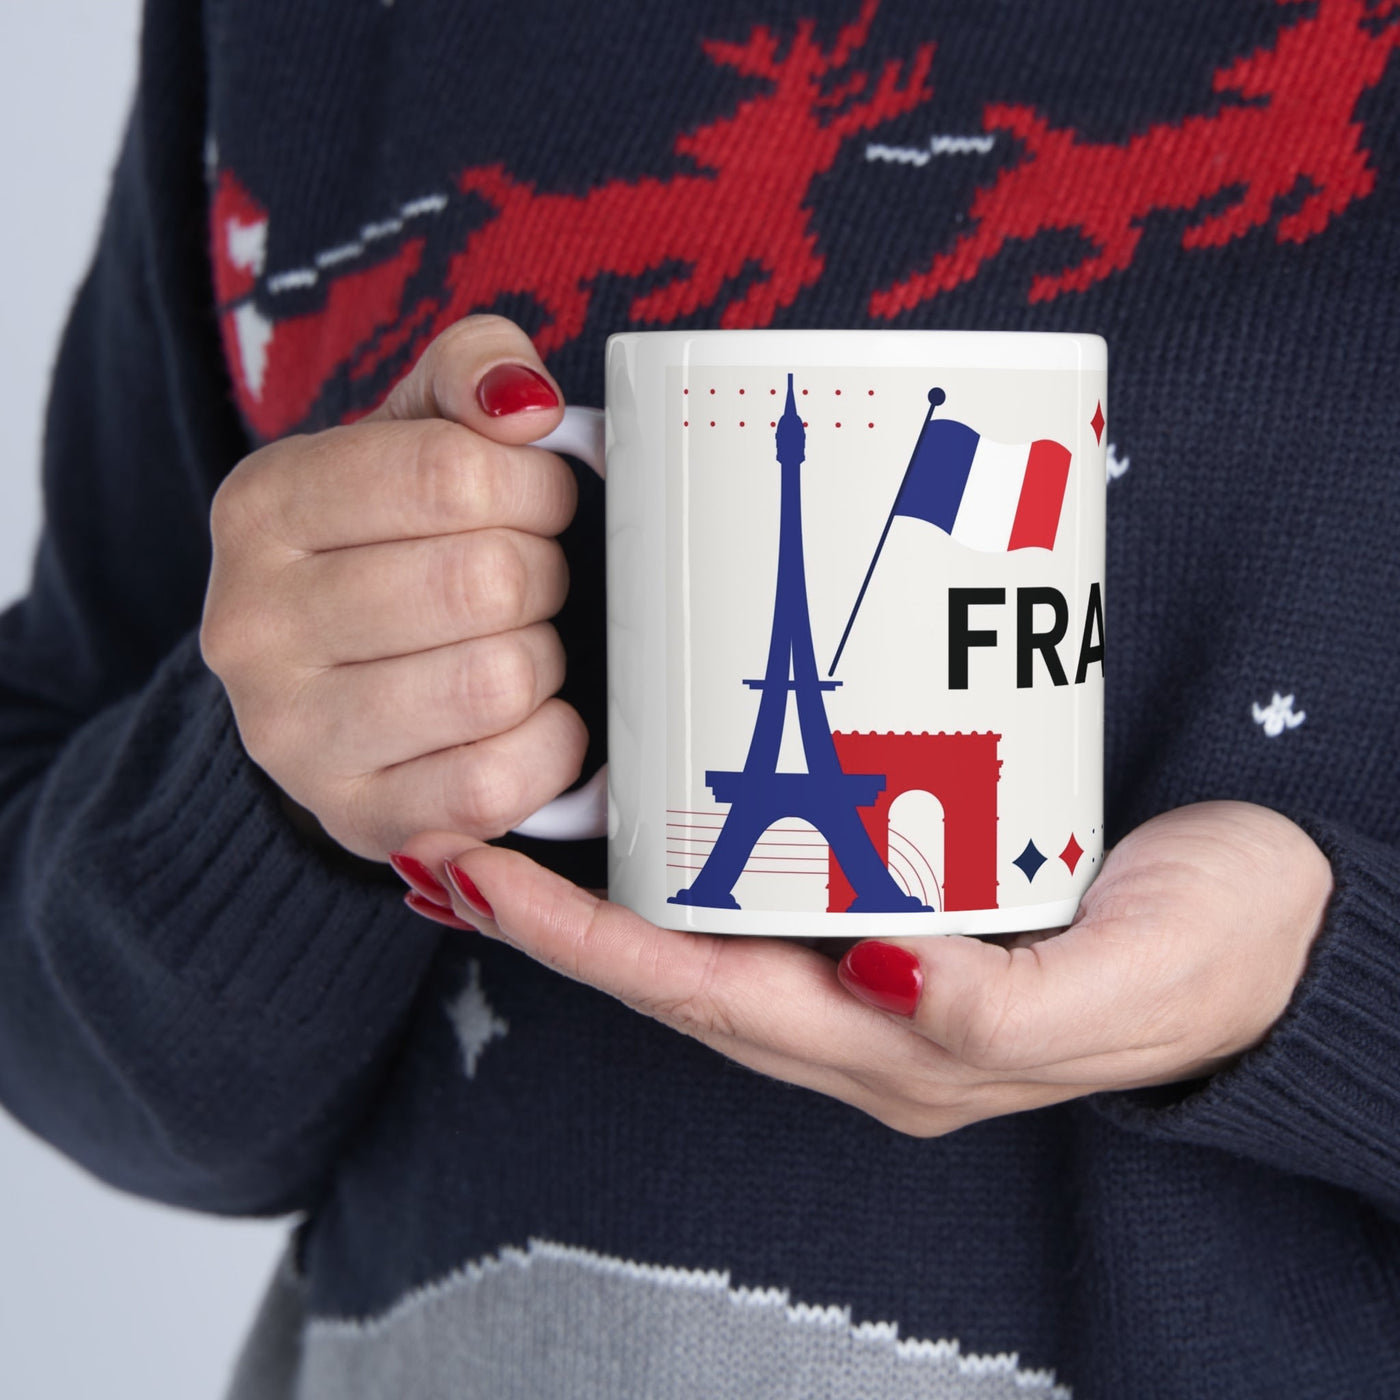 France Coffee Mug - Ezra's Clothing